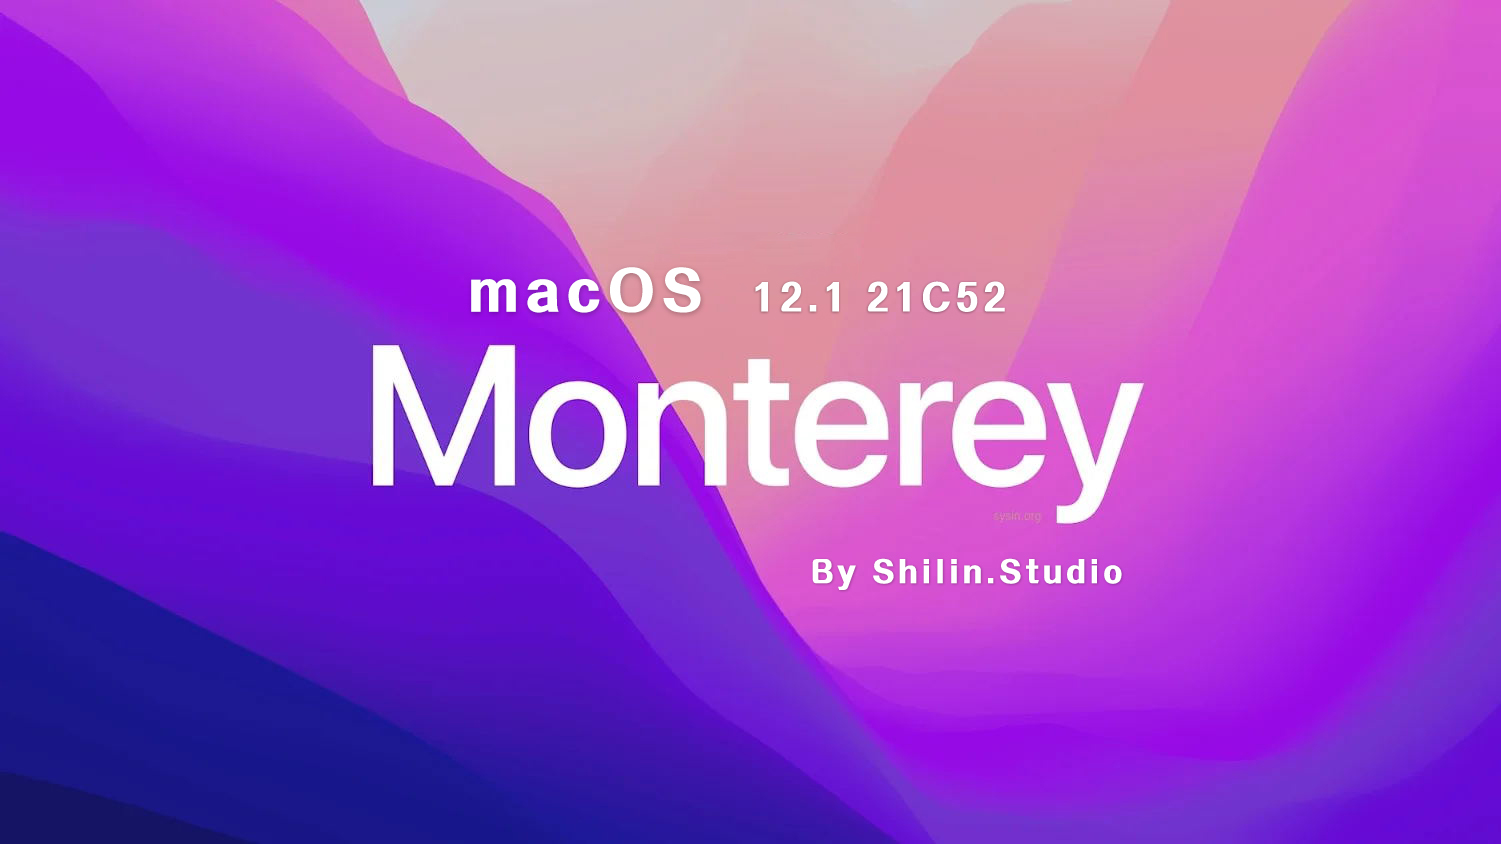 [macOS]macOS_Monterey_12.1_21C52_For_Shilin.Studio.iso可引导可虚拟机安装镜像包（已修复引导并优化）